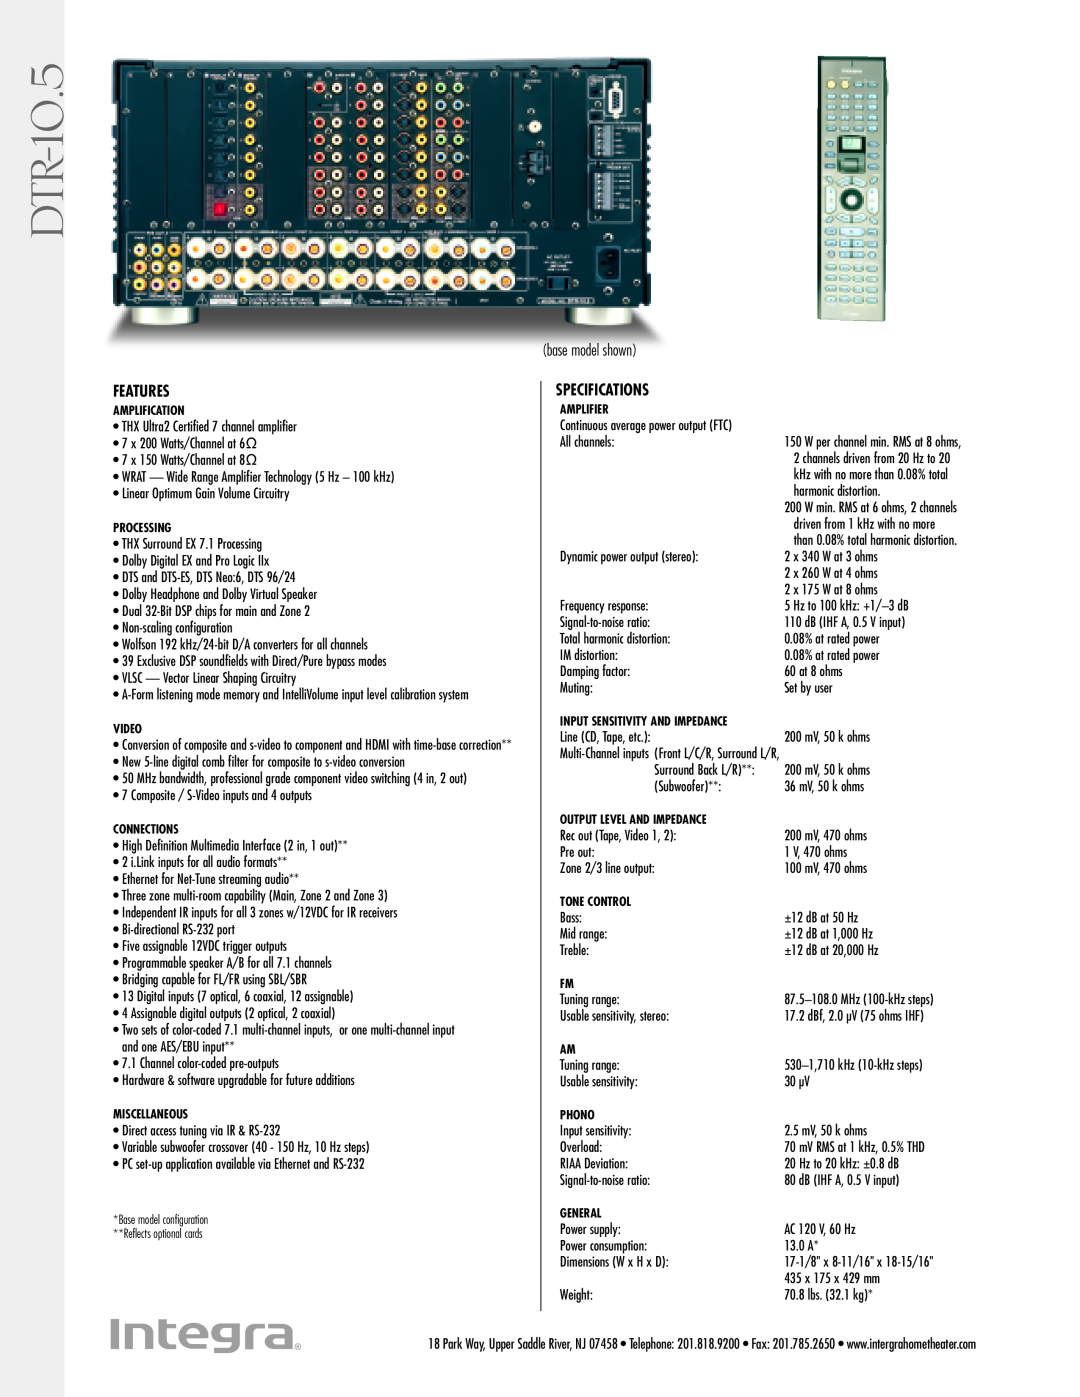 Onkyo DTR-10.5 manual Features, base model shown 